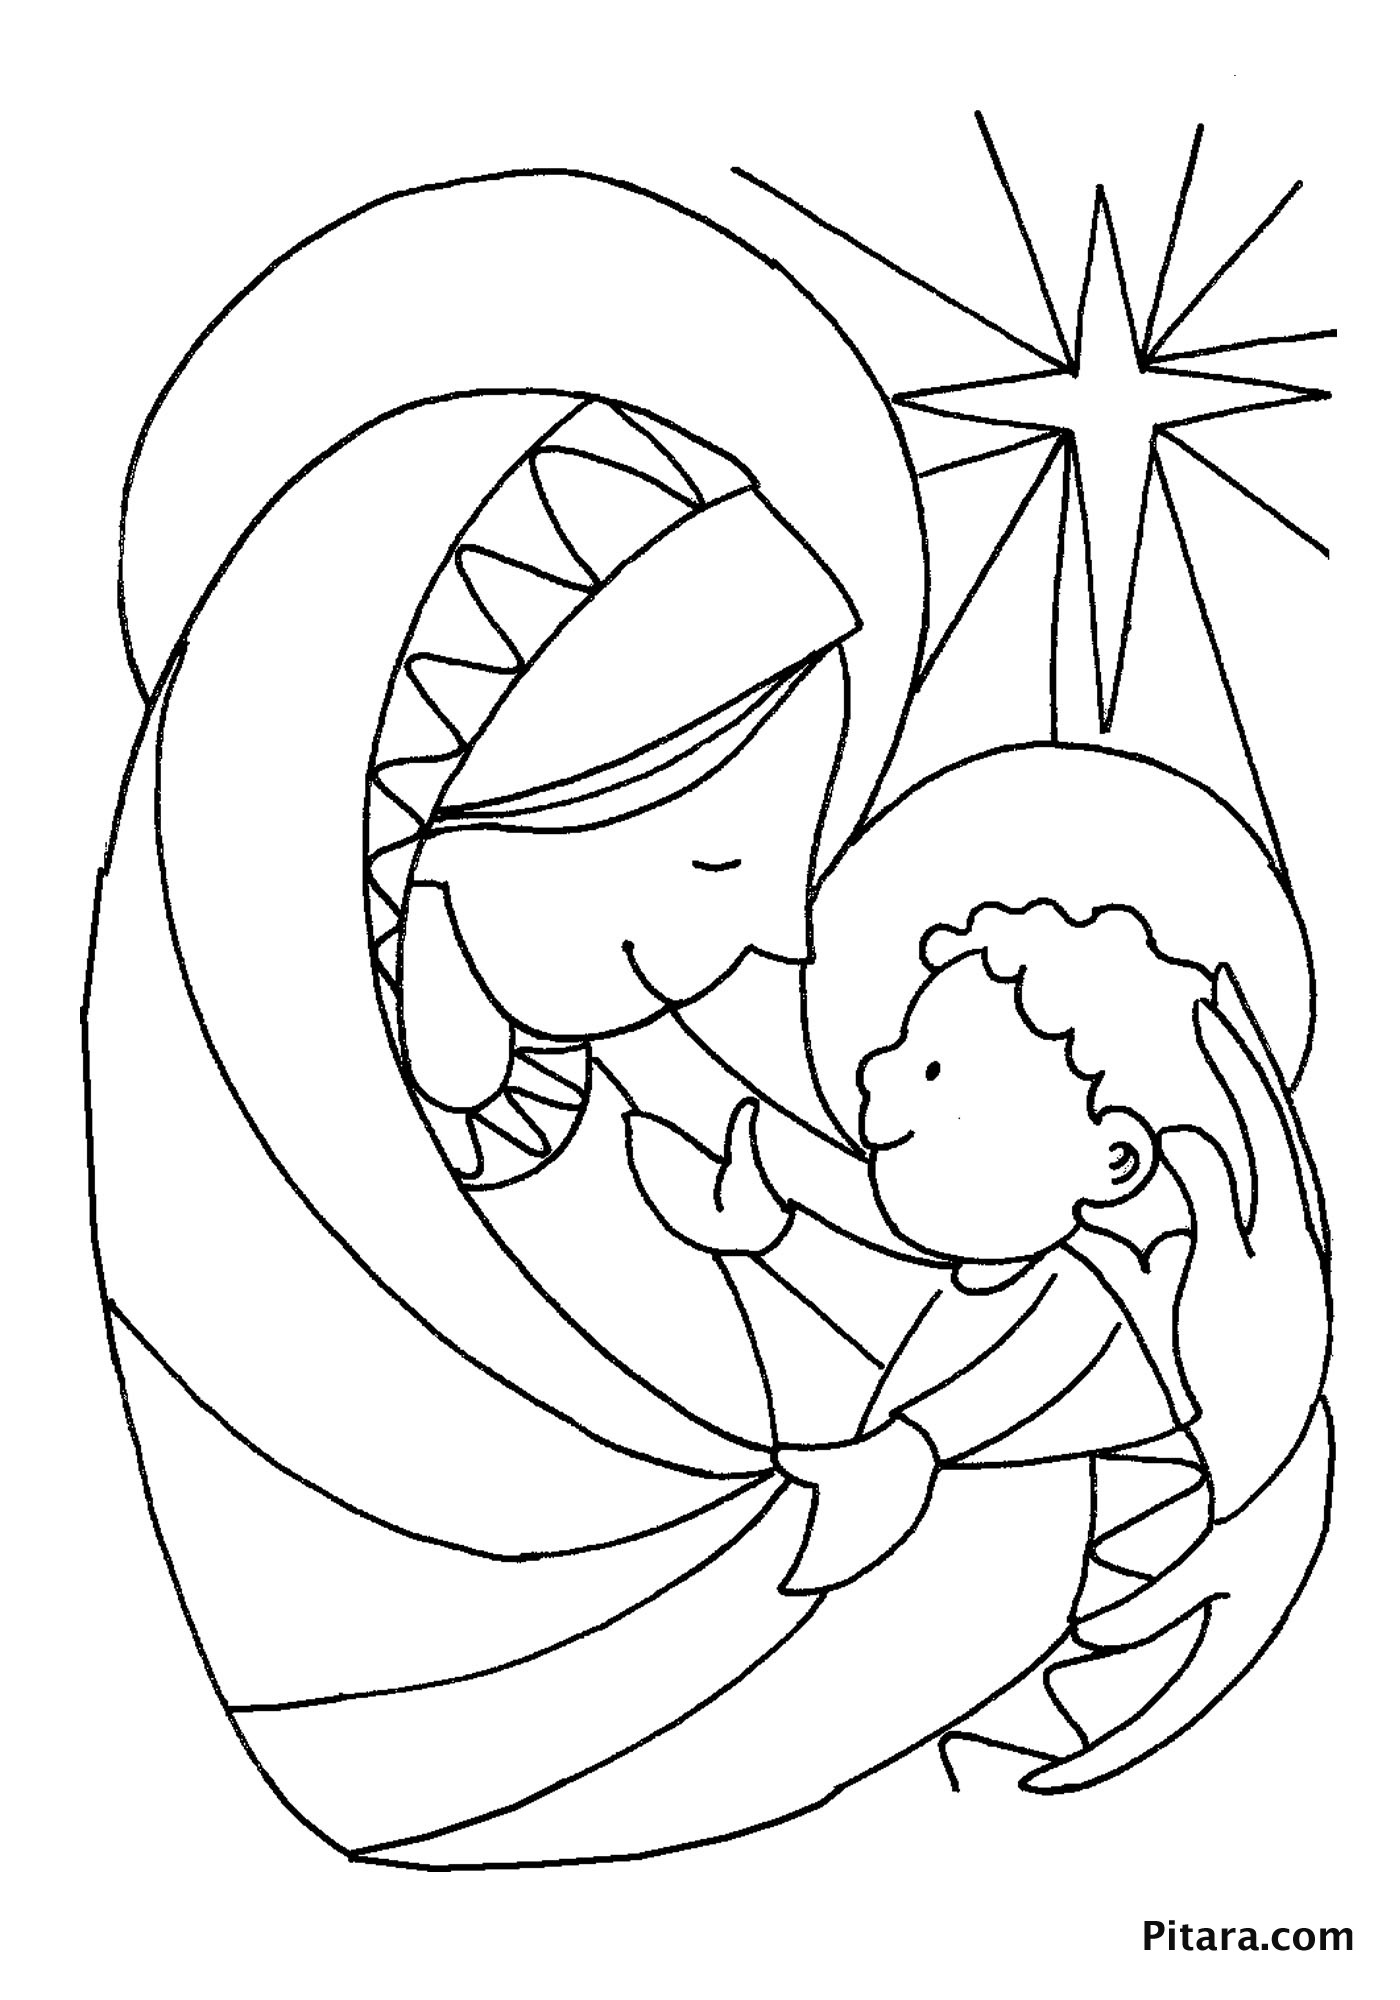 Mary & baby Jesus - Coloring page | Pitara Kids Network